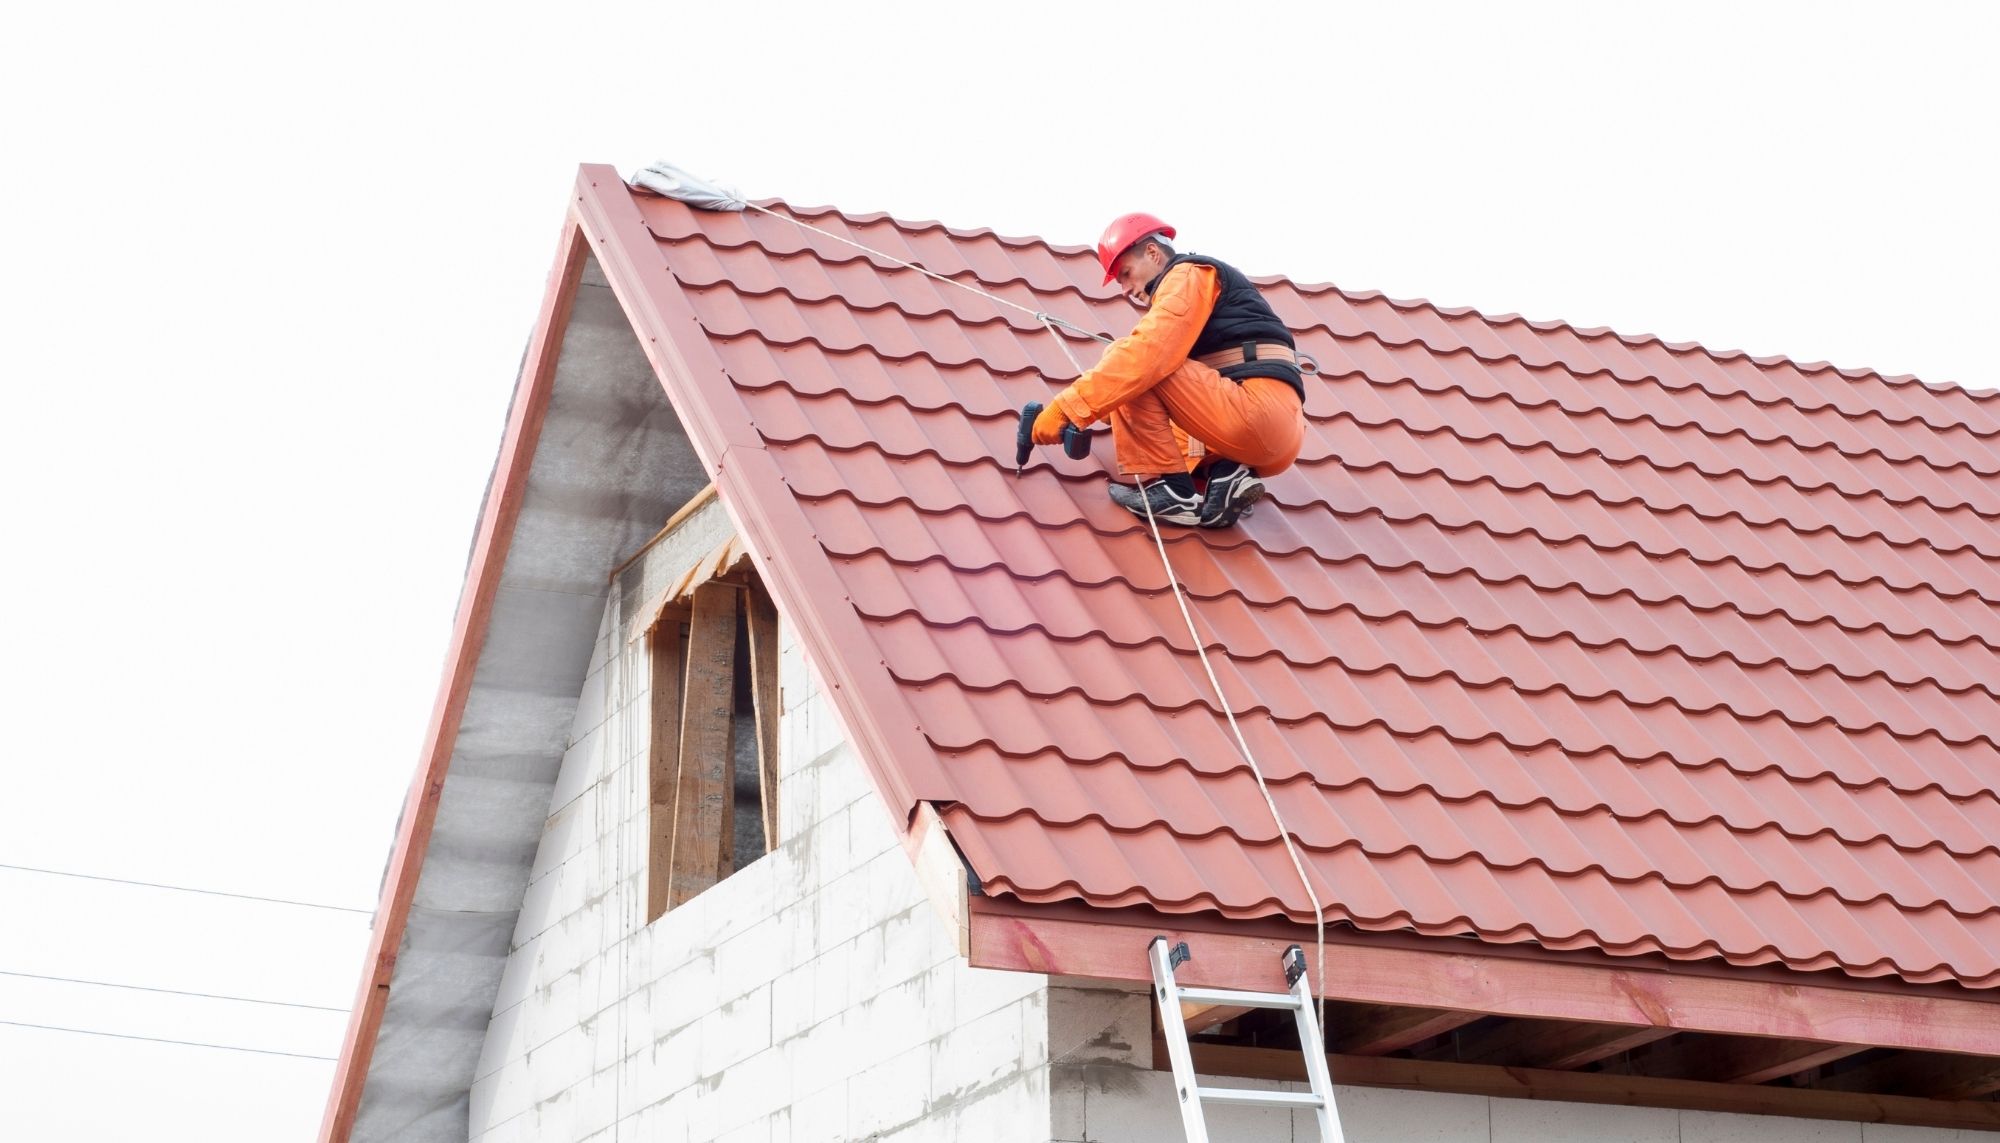 Should I seal my flat roof